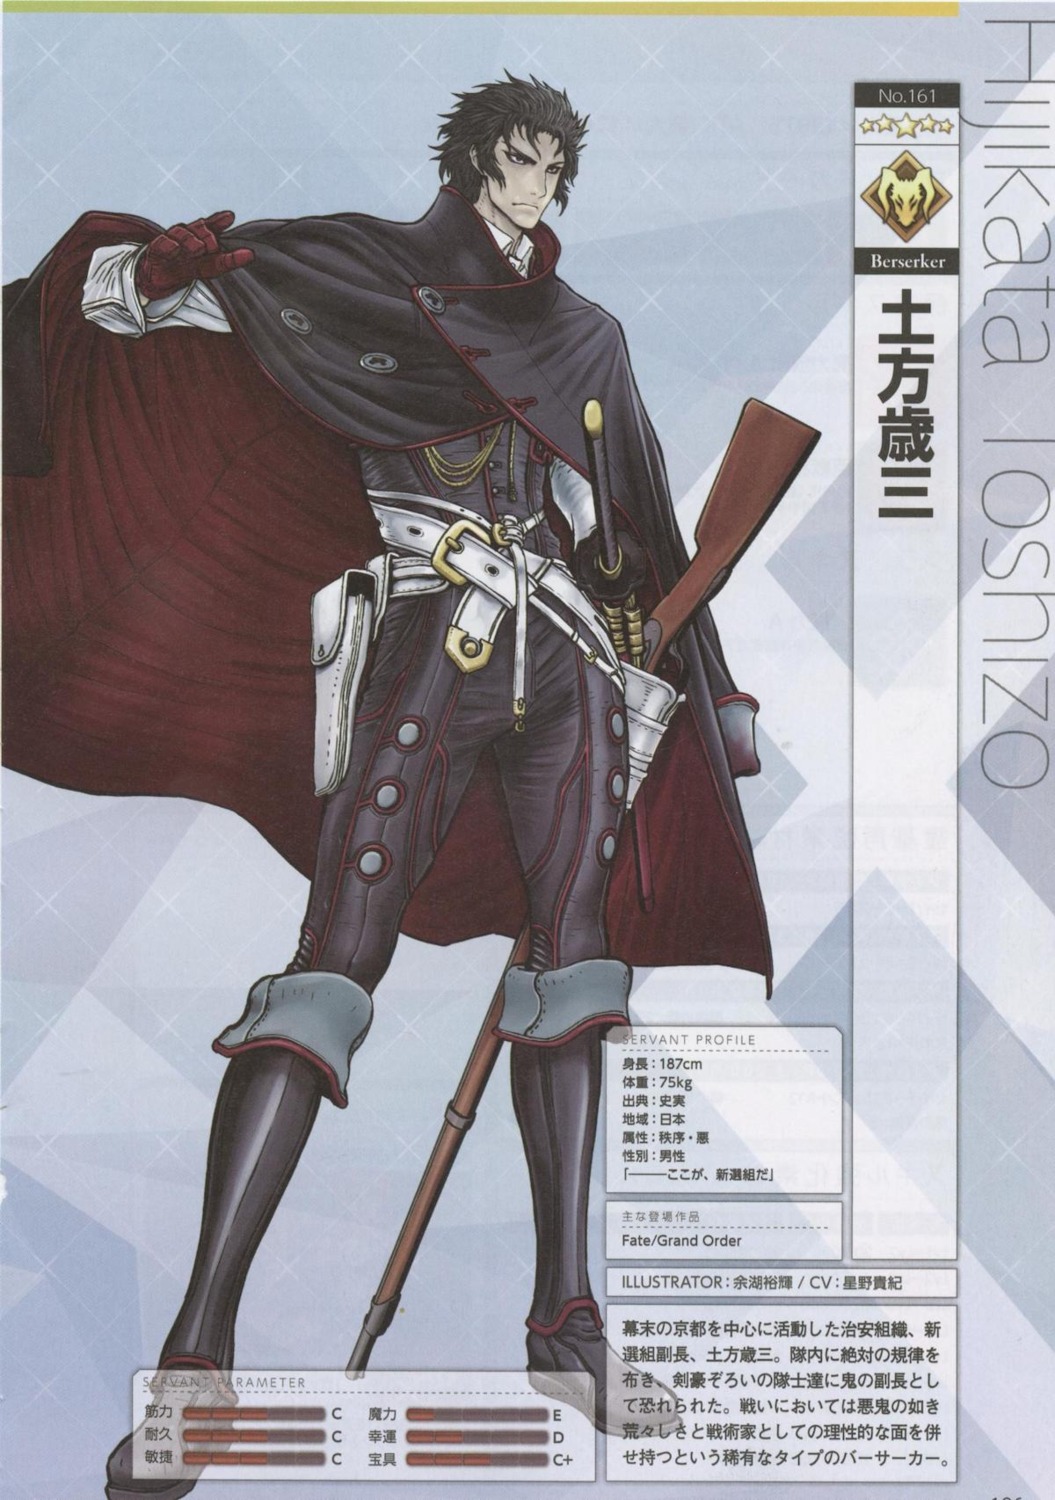 Yogo Yuuki Fate Grand Order Hijikata Toshizou Fate Grand Order Gun Male Profile Page Cropme Yande Re